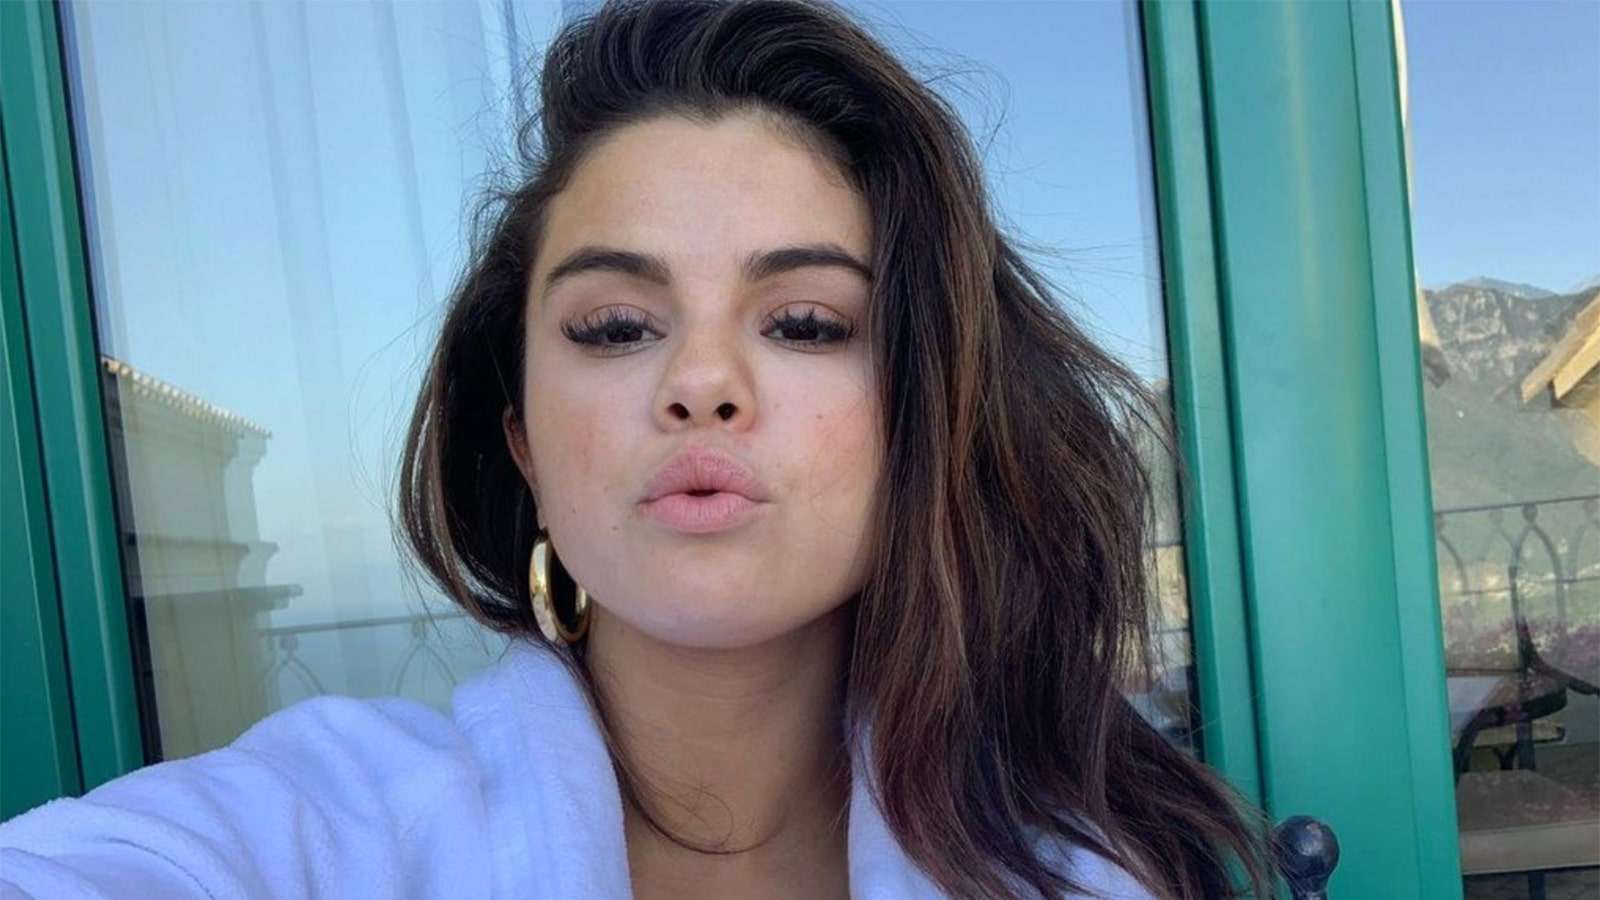 Selena Gomez posing on Instagram